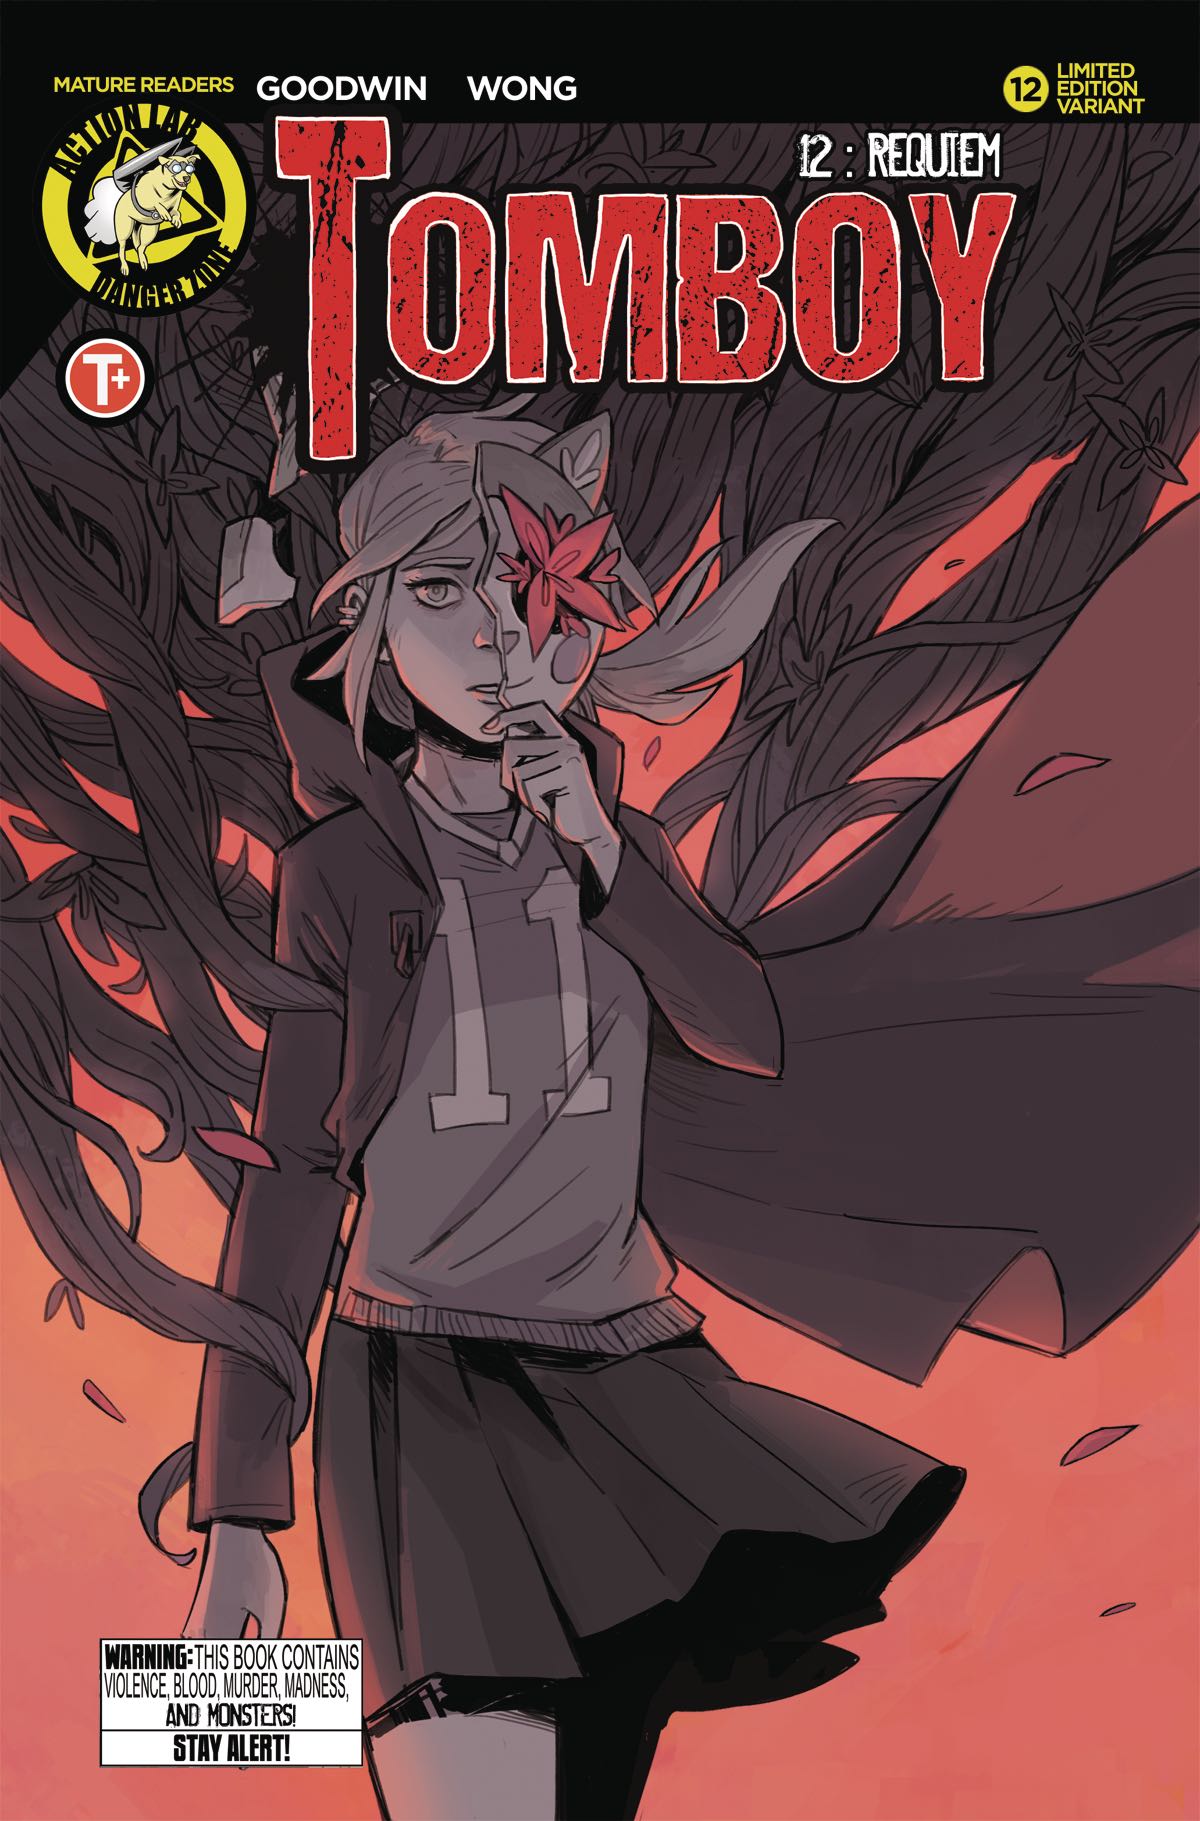 Tomboy #12 (Wong Cover) | Fresh Comics